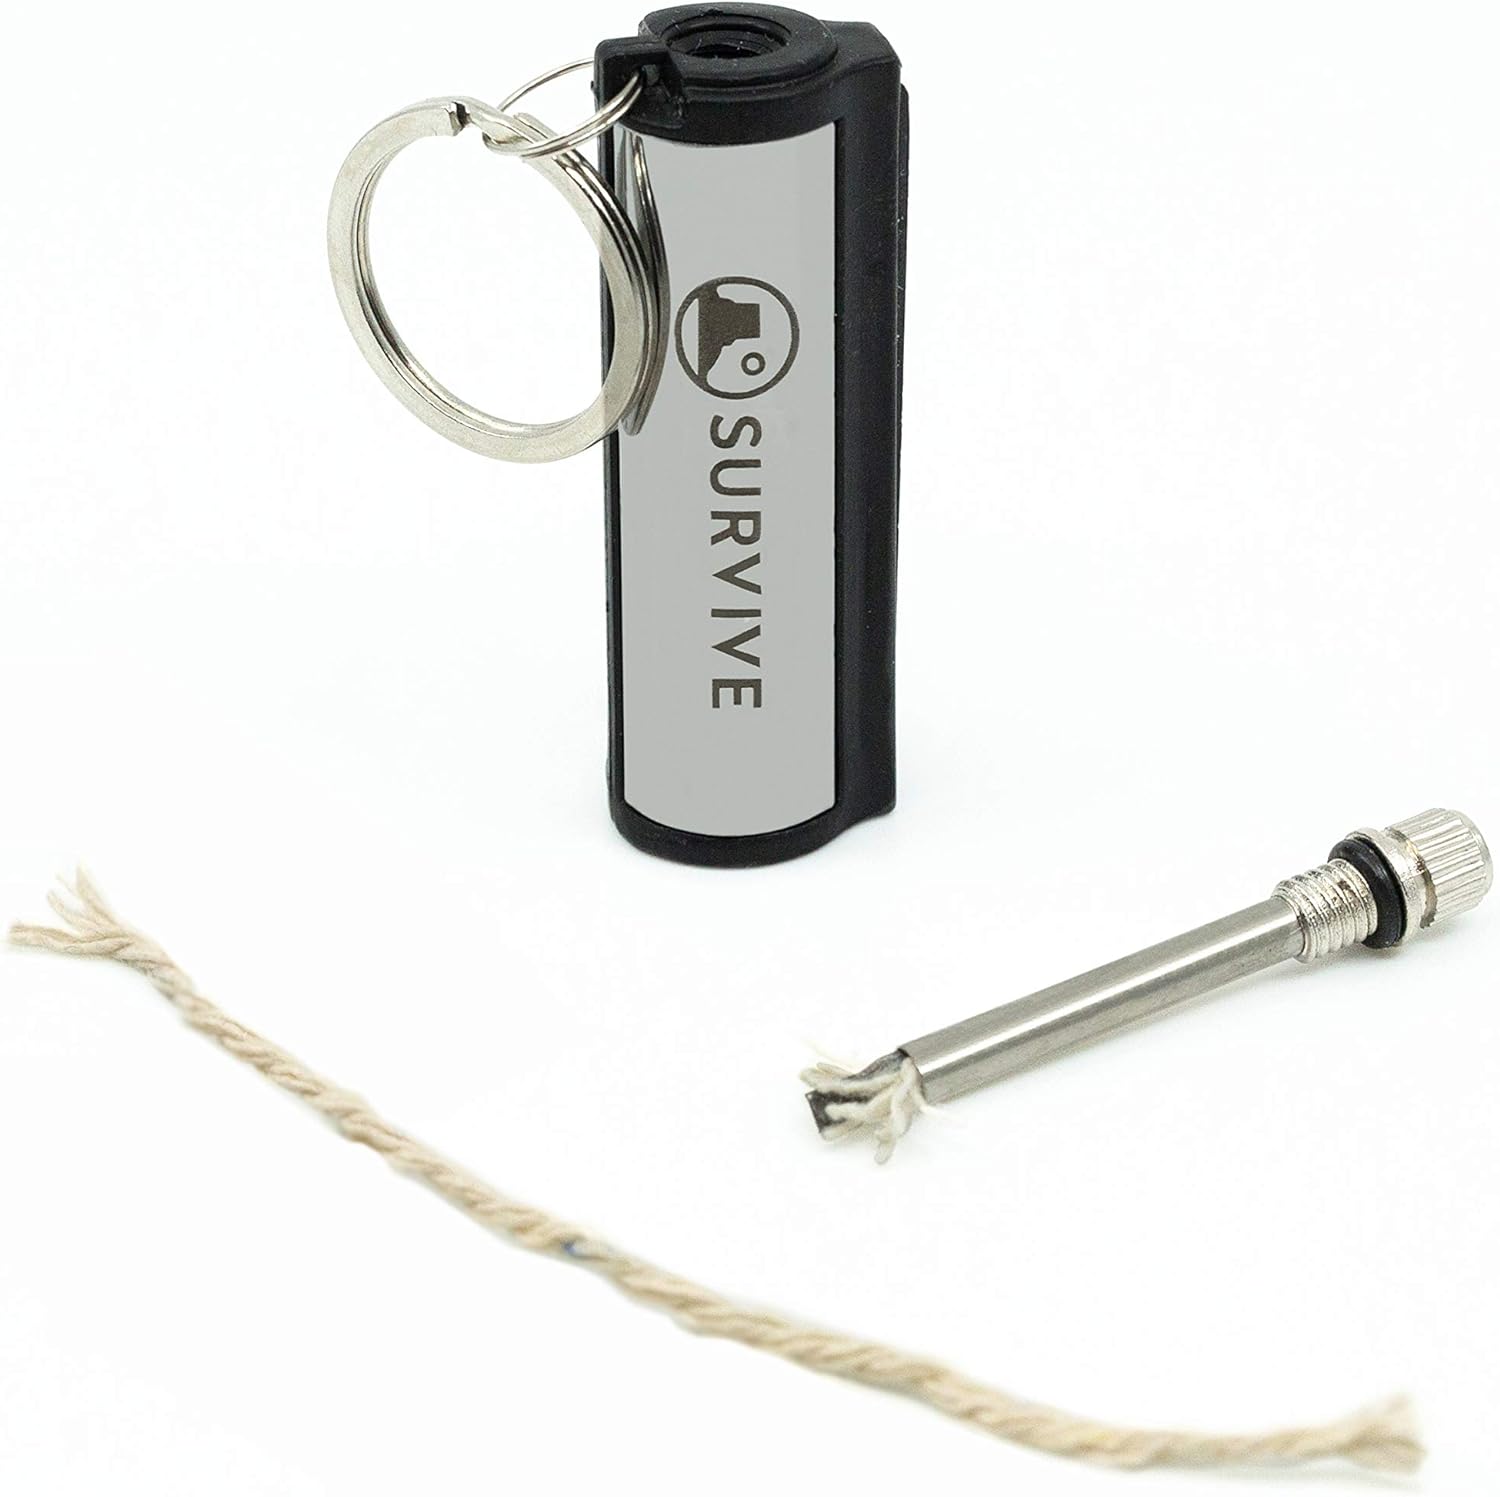 SURVIVE Permanent Match, Pack of 5, The Forever Lighter, Emergency Fire Starter Striker Set, Metal Keychain Unlimited Waterproof Stick